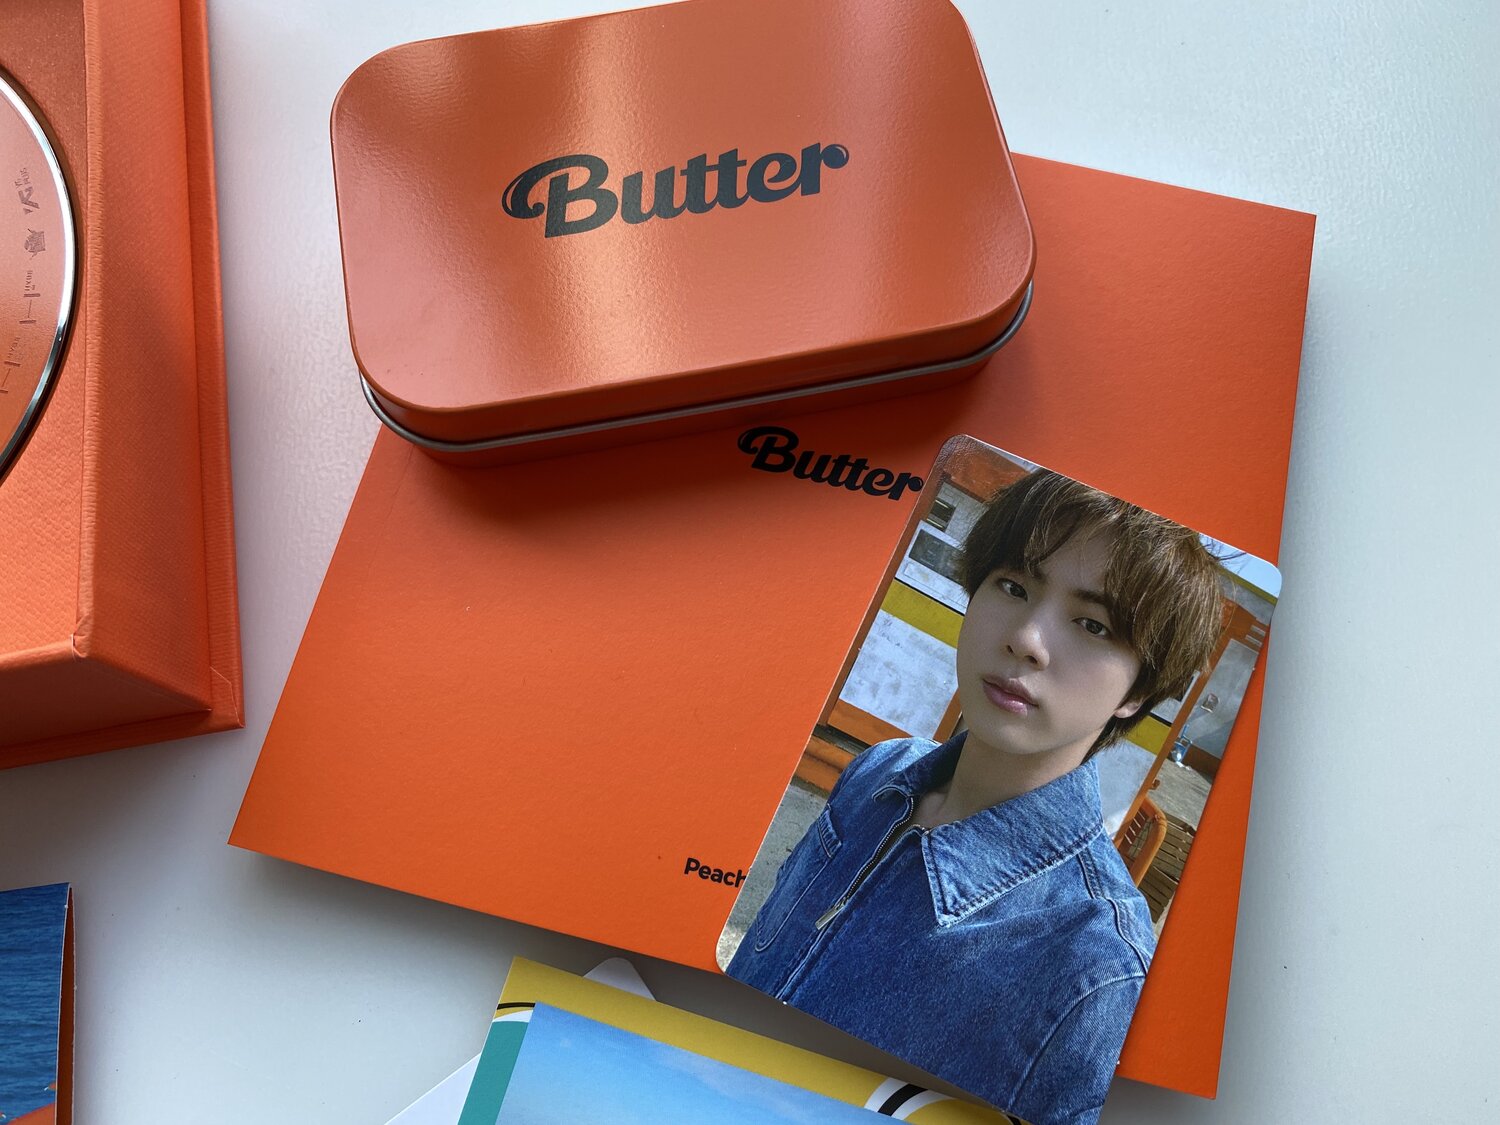 BTS BUTTER CD (Peaches Version) + Jin set pre-order photo card — Foxclouds